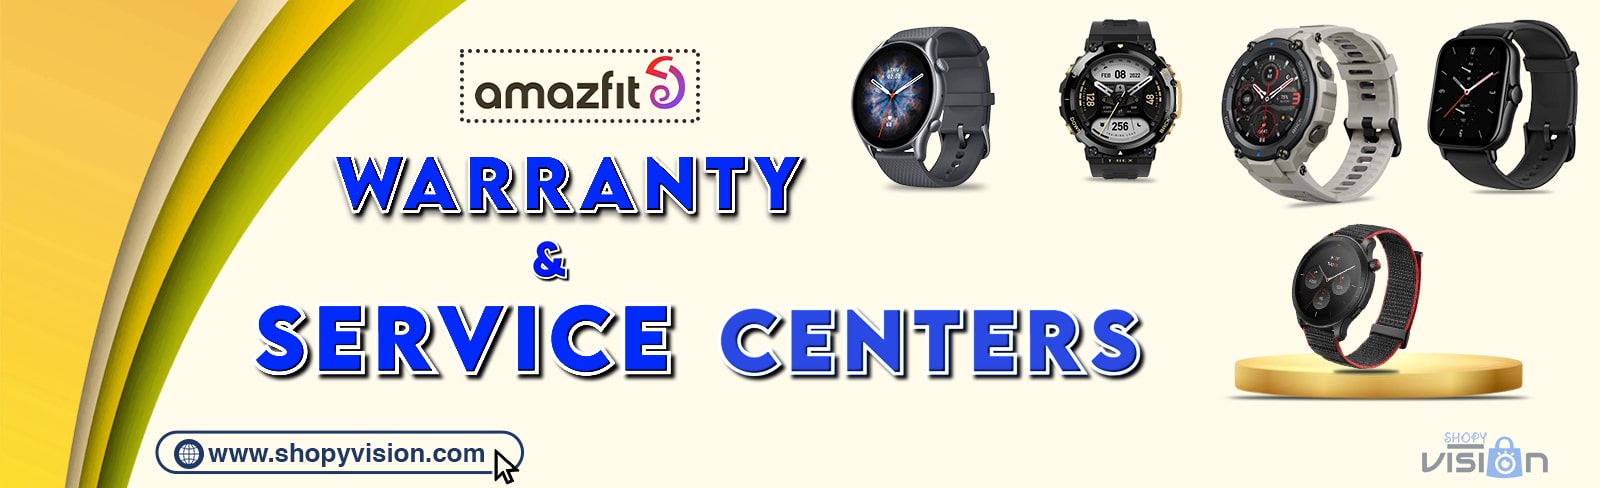 Amazfit Warranty & Service Centers